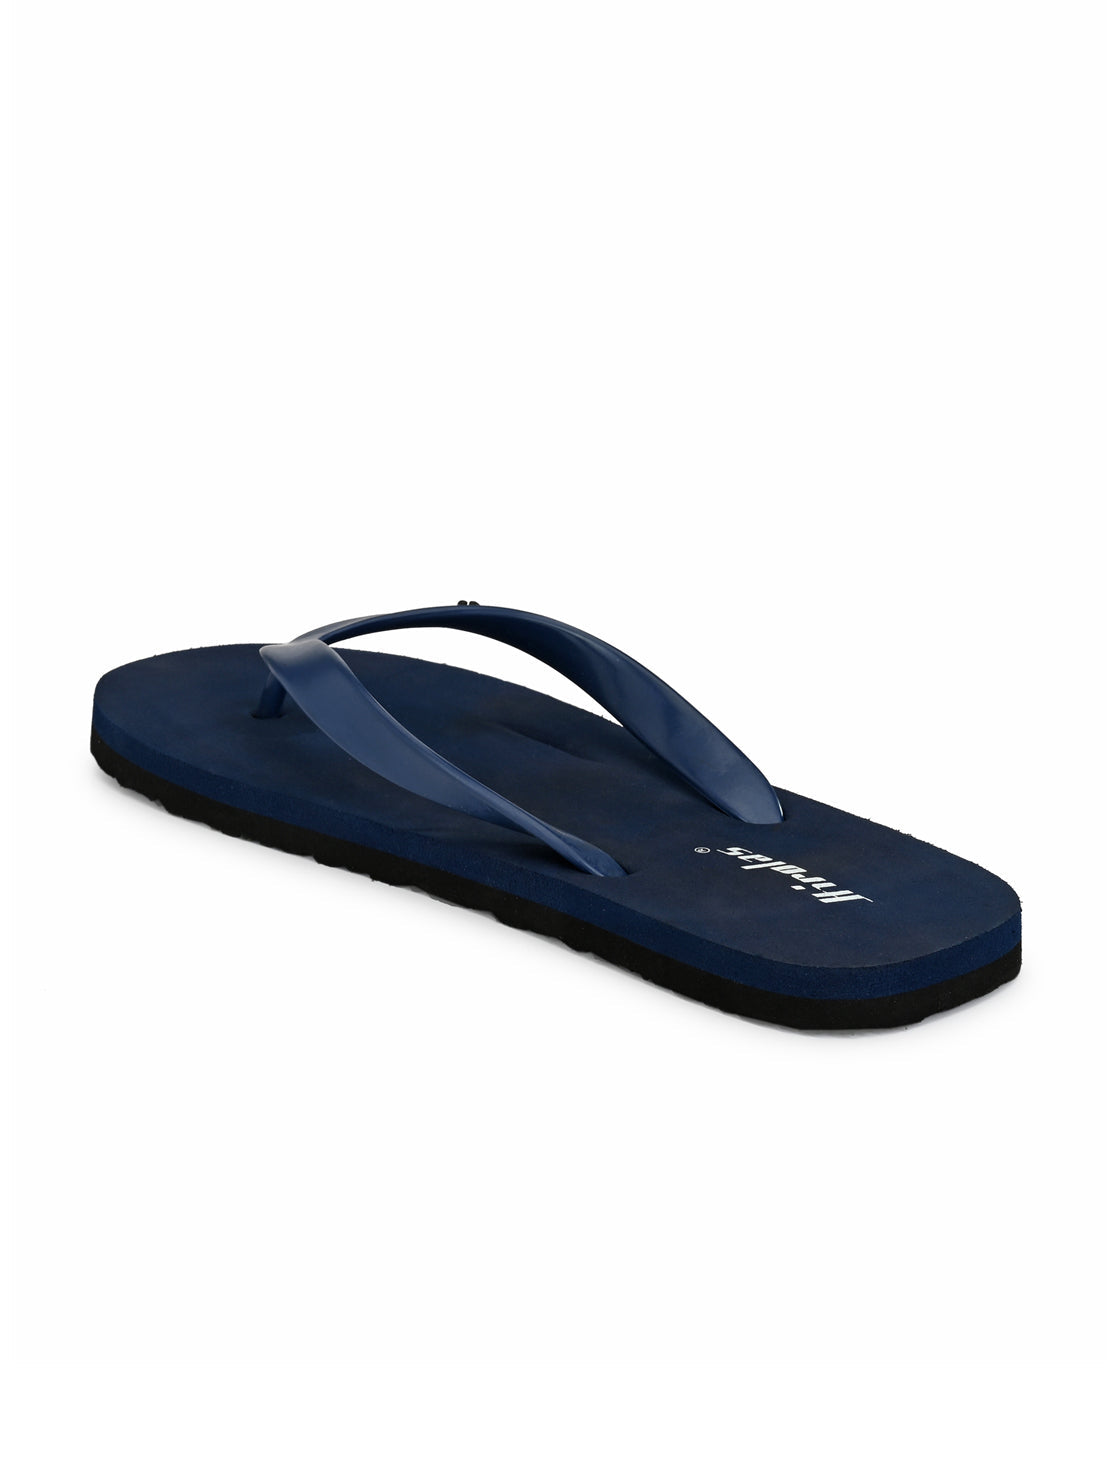 Hirolas® Men's Solid Blue Thong Flip-Flops (HROFF08BLU)